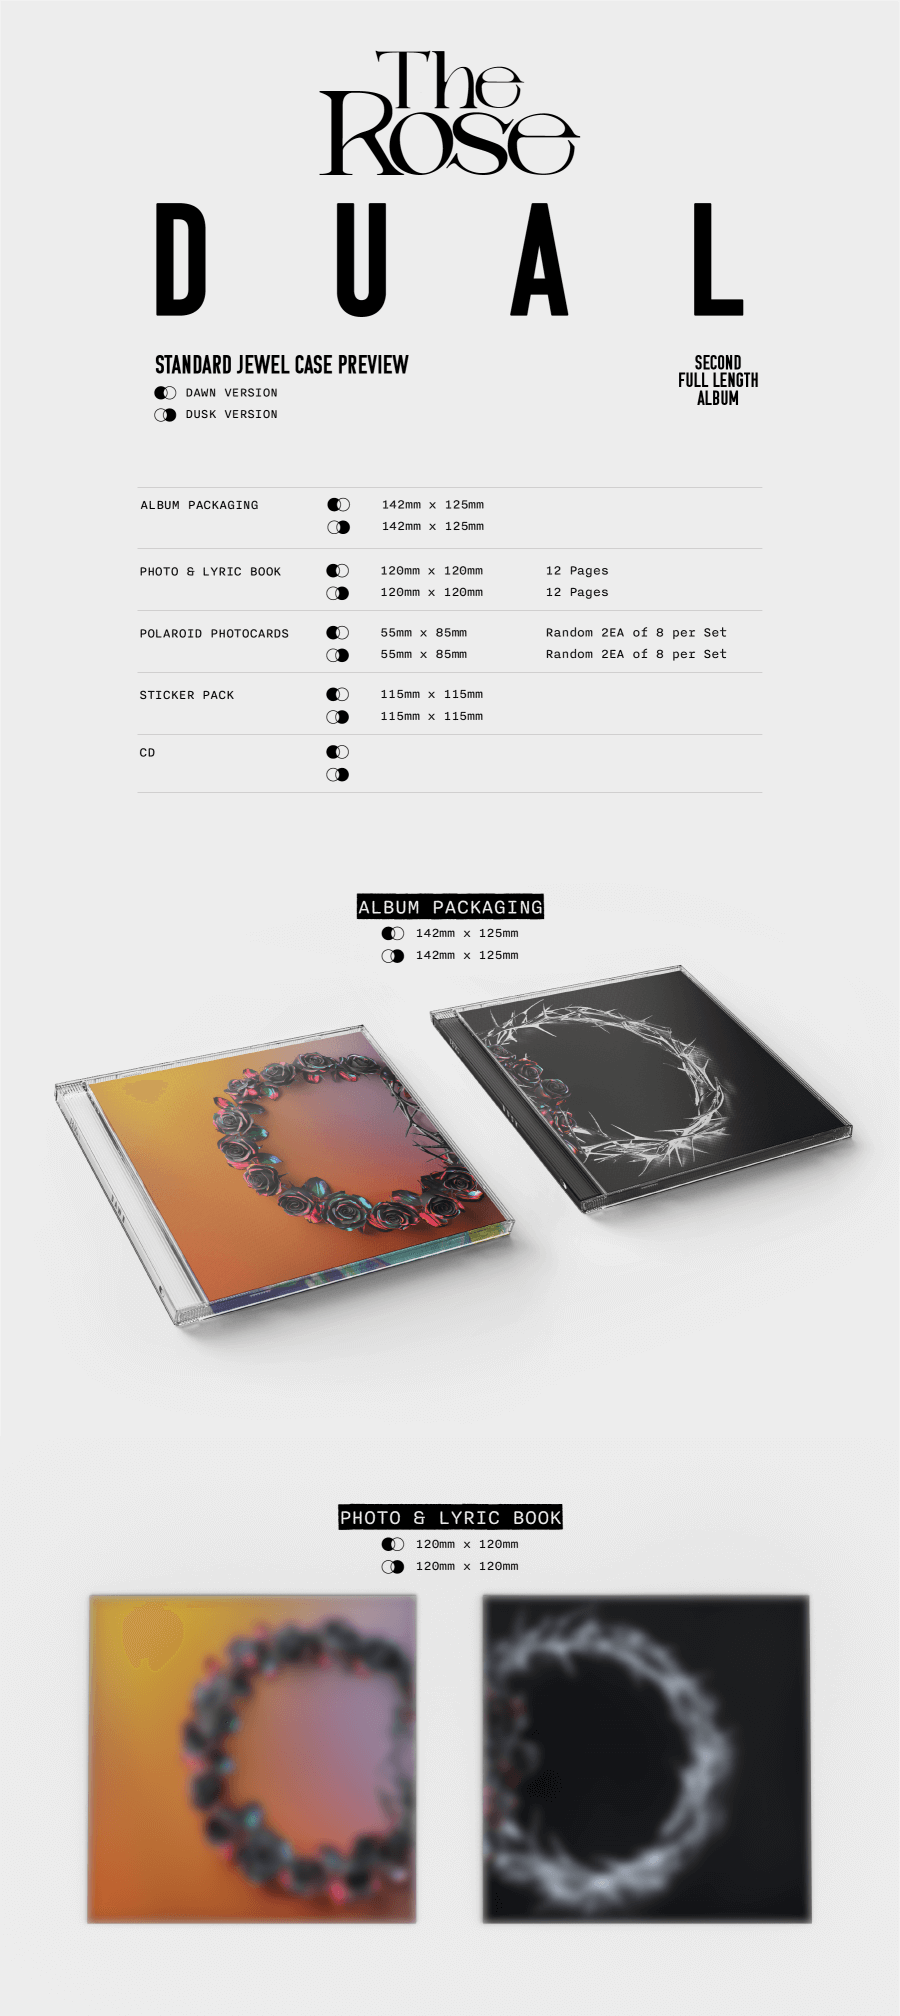 The Rose 2nd Full Album DUAL Jewel Version Inclusions Album Packaging Photo & Lyric Book